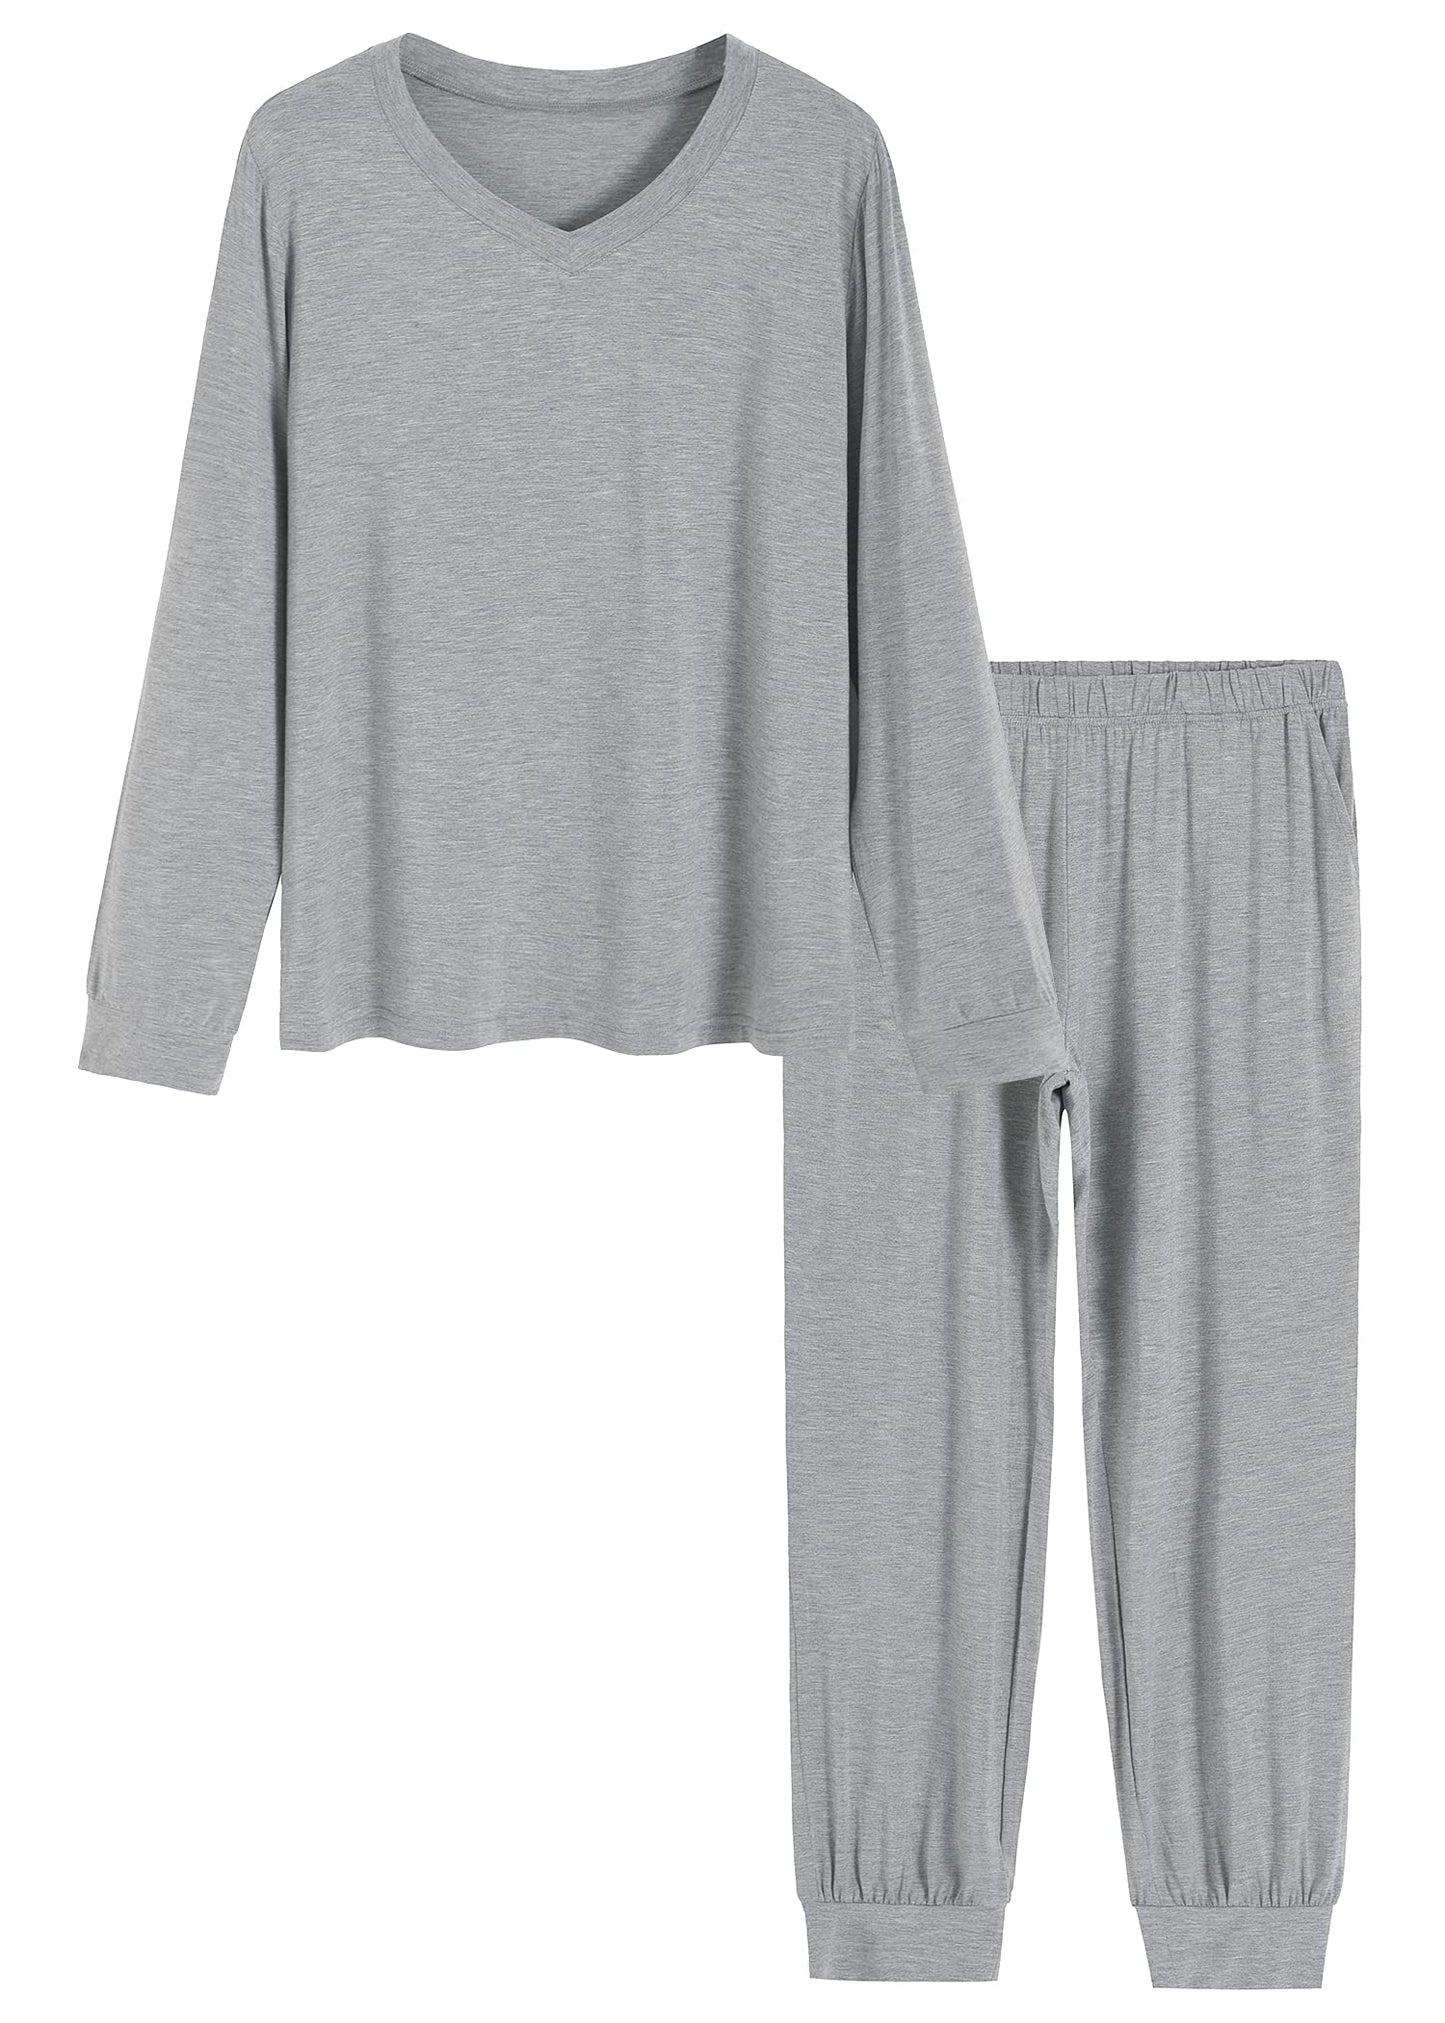 Women's Bamboo Viscose Long Sleeves Top Jogger Pants Pajamas Set - Latuza